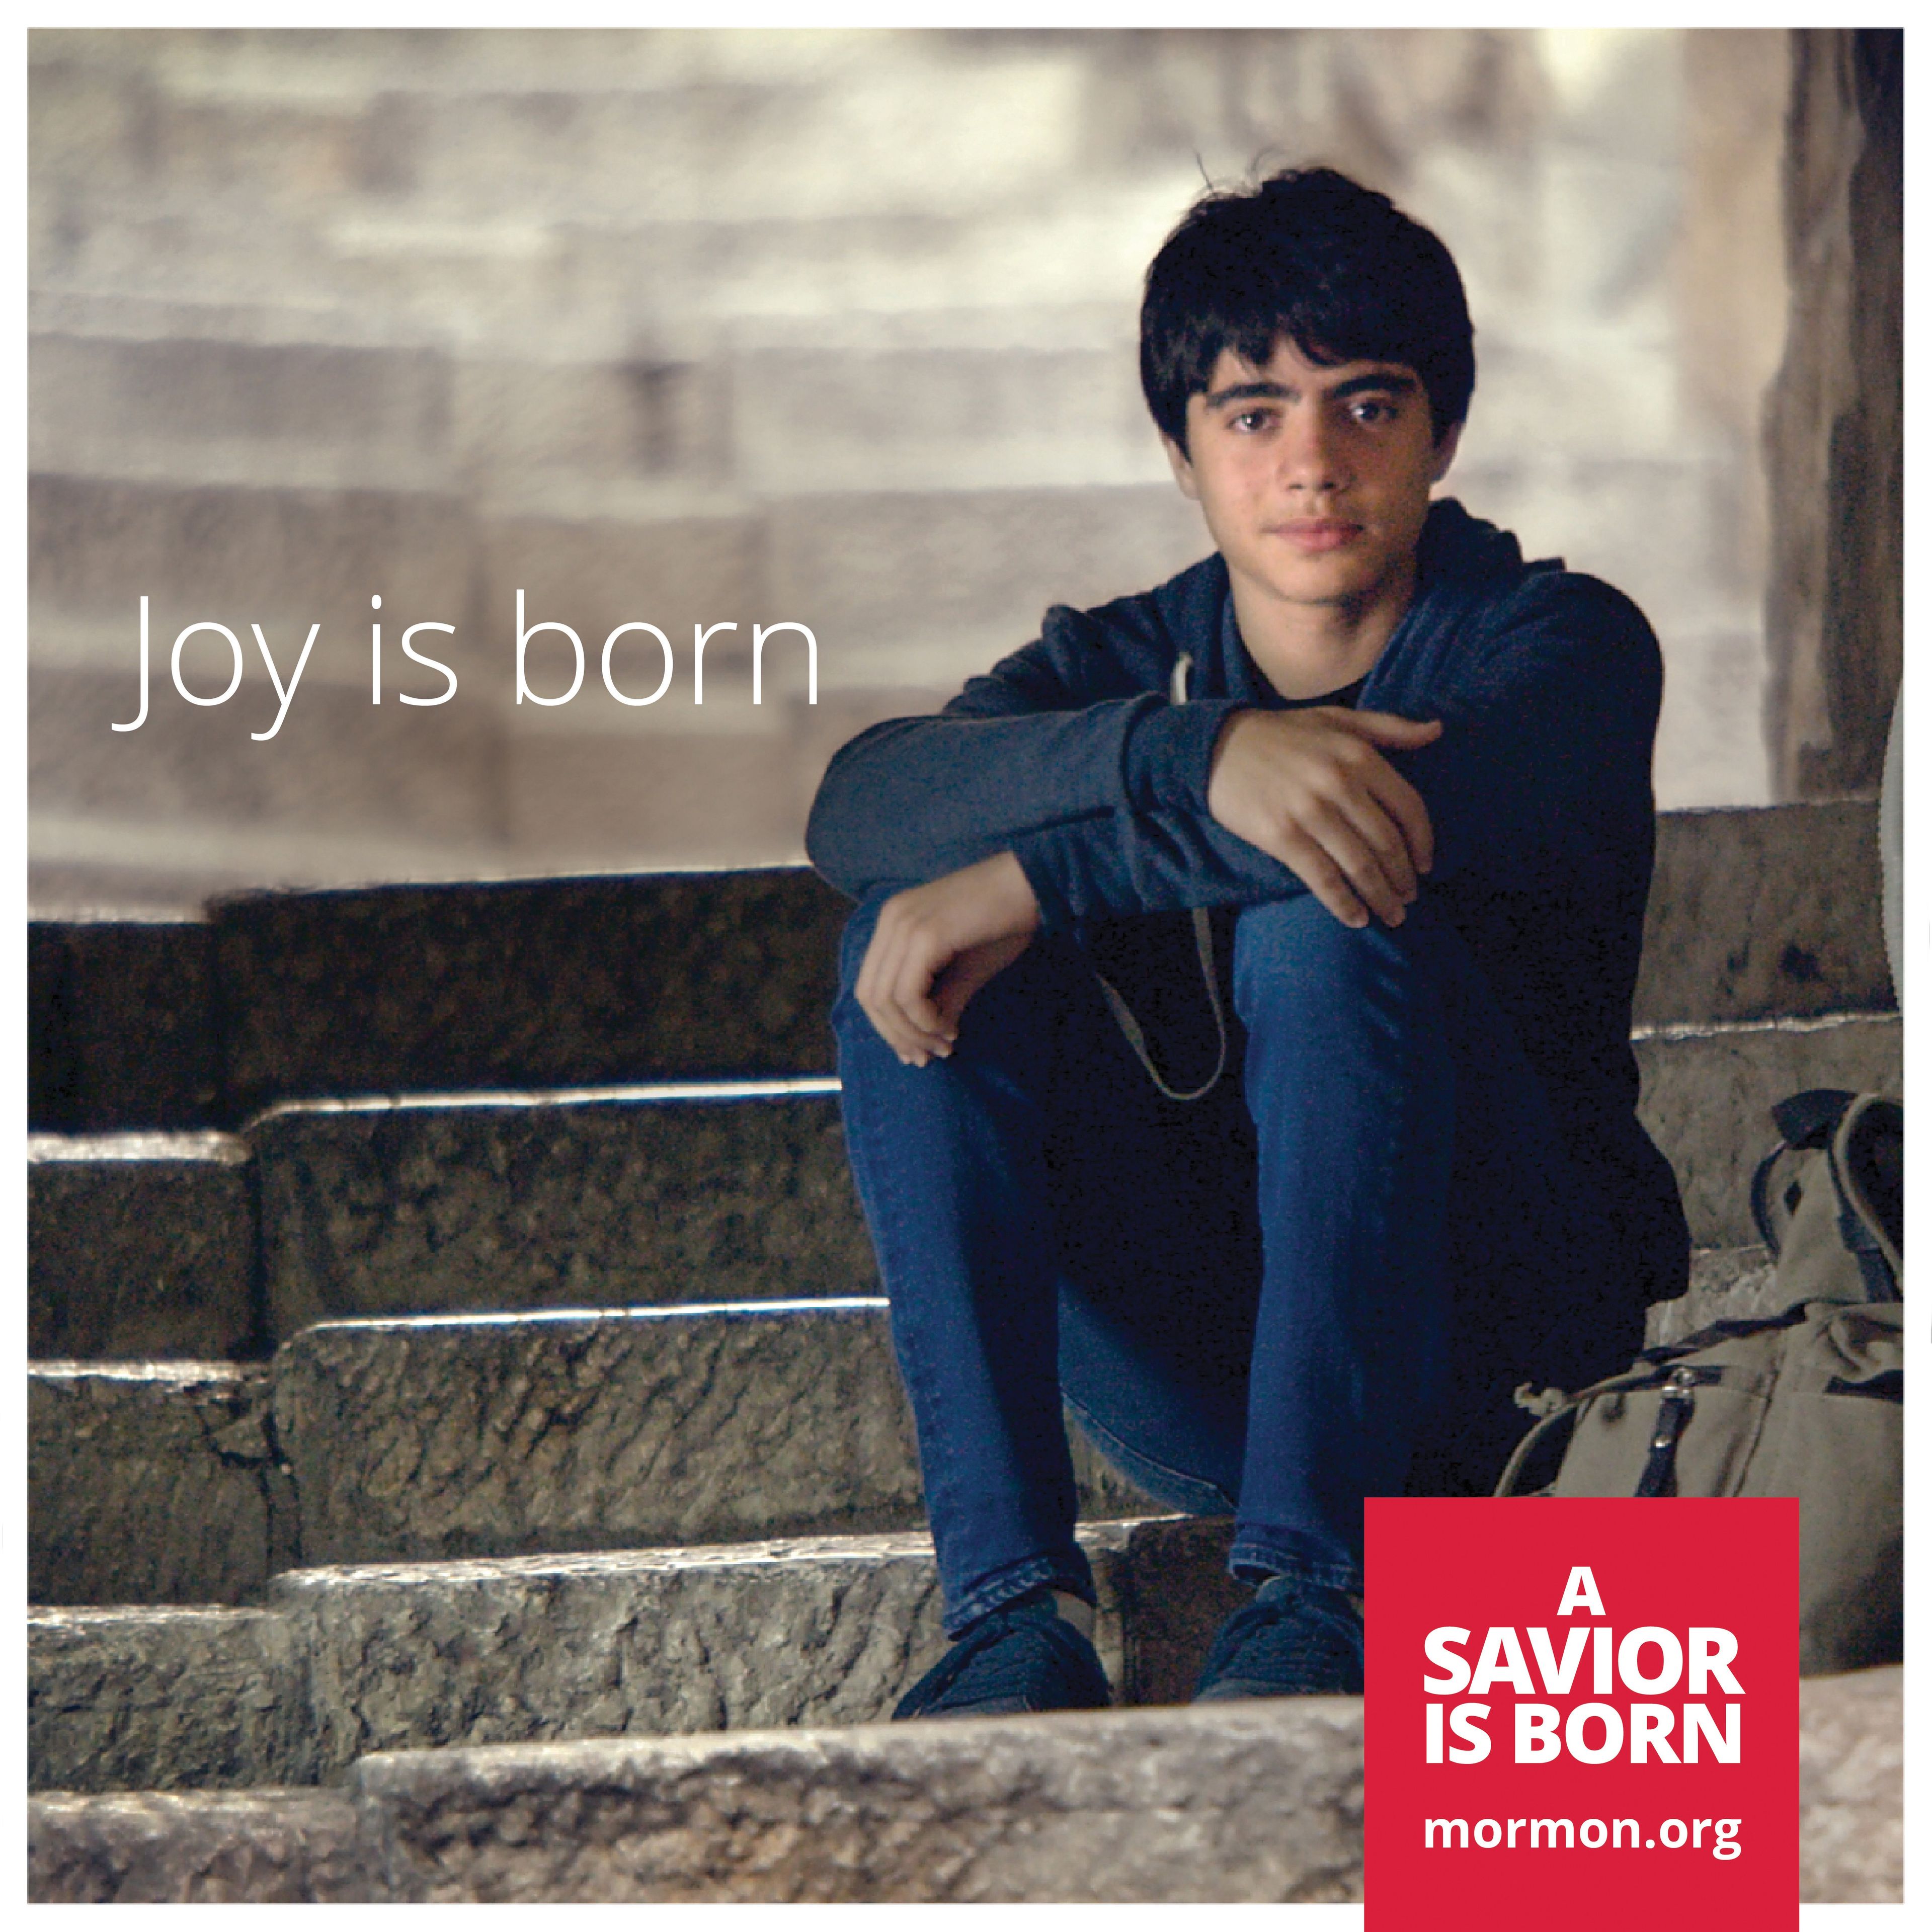 “Joy is born.” —mormon.org, “A Savior Is Born”